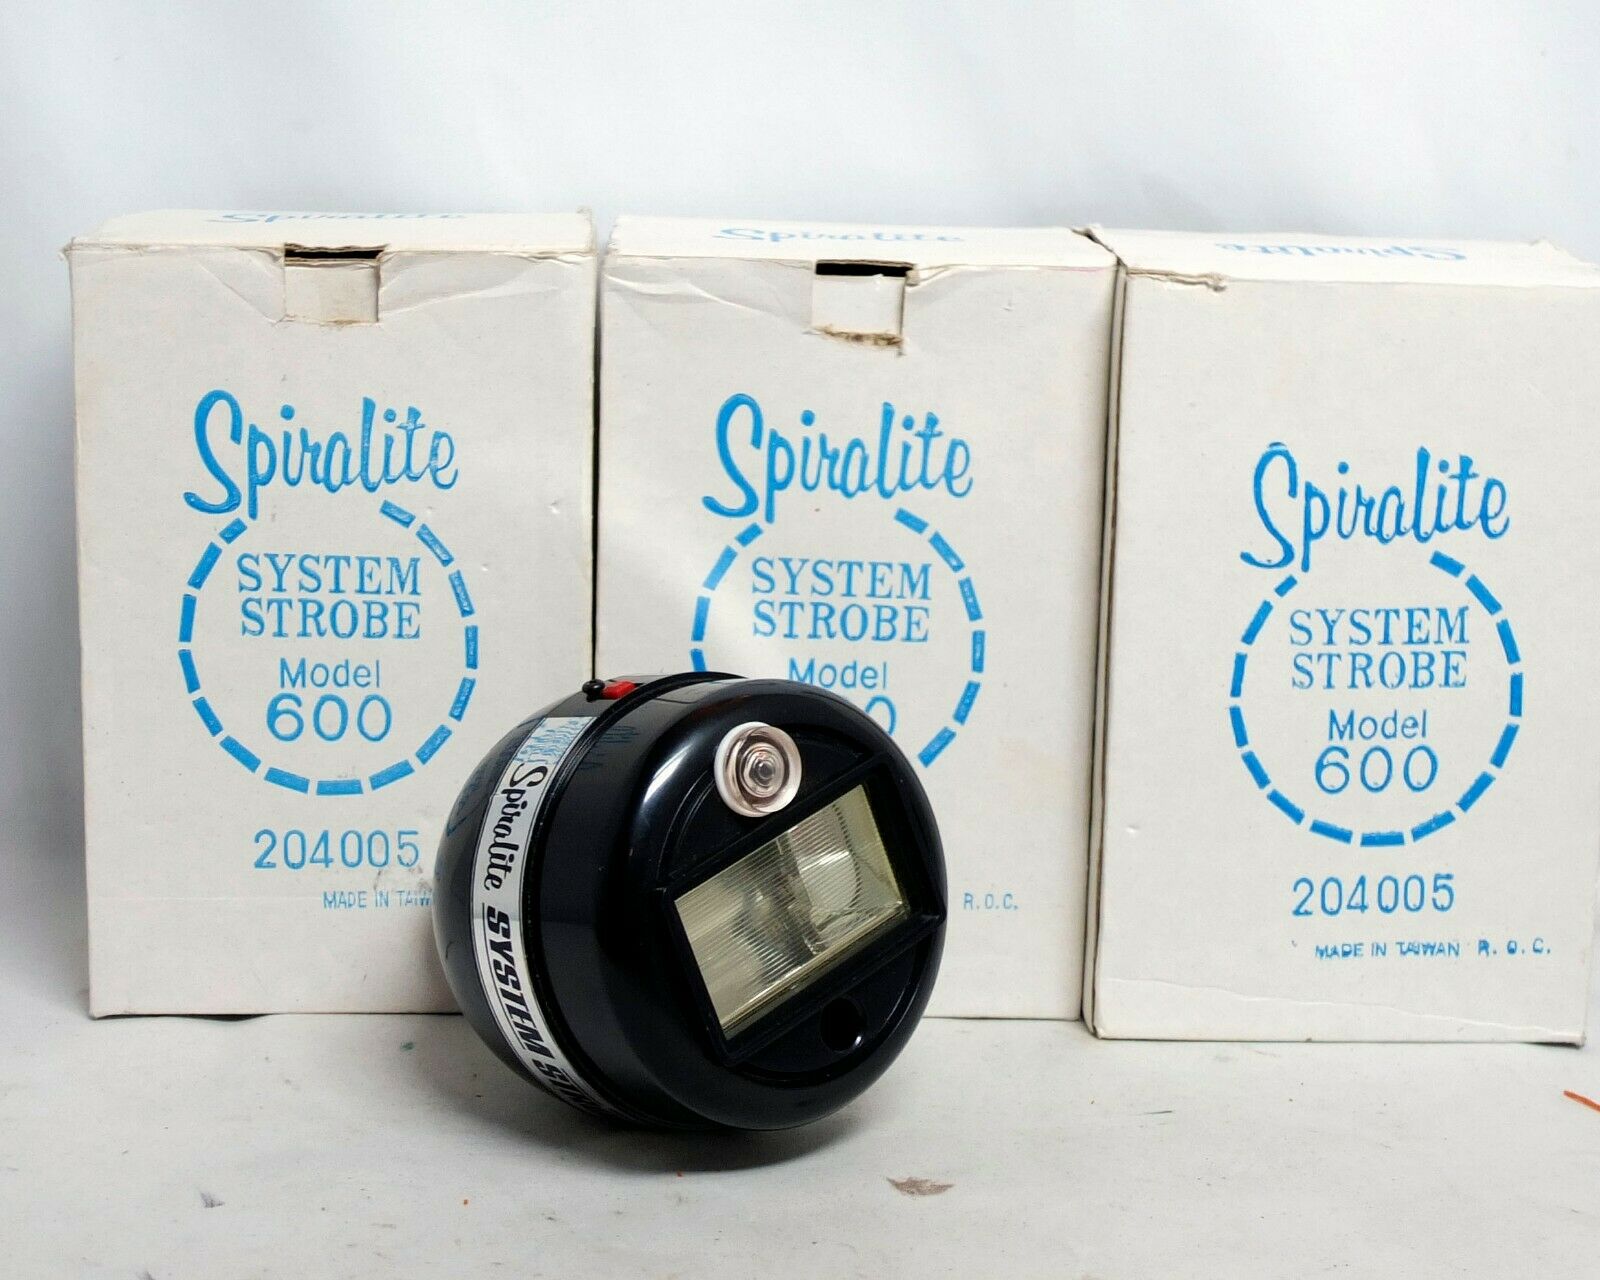 Spiralite System Strobe Model 600 Ss Slave Flash Bulb Ln 1x